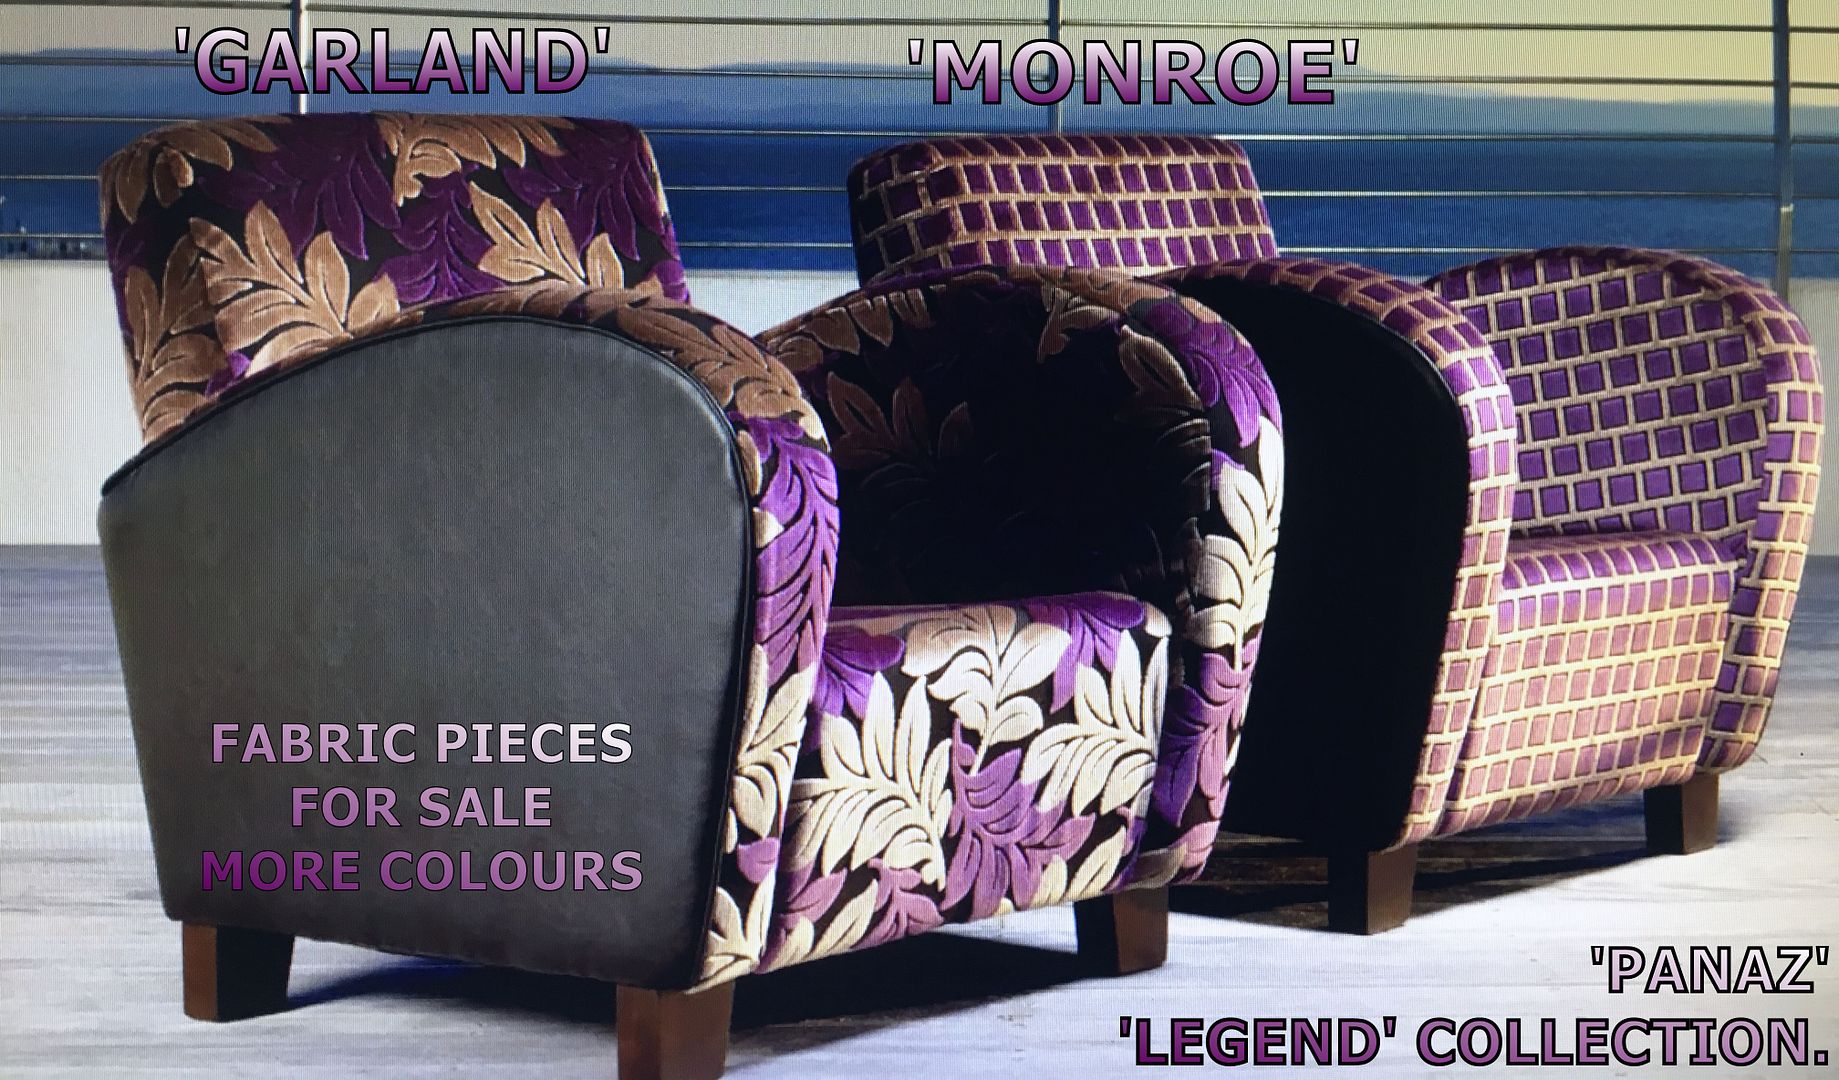  photo floral monroe garland panaz upholstery fabric legend CHAIR screenshot TEXT_zps8wfyetfa.jpg